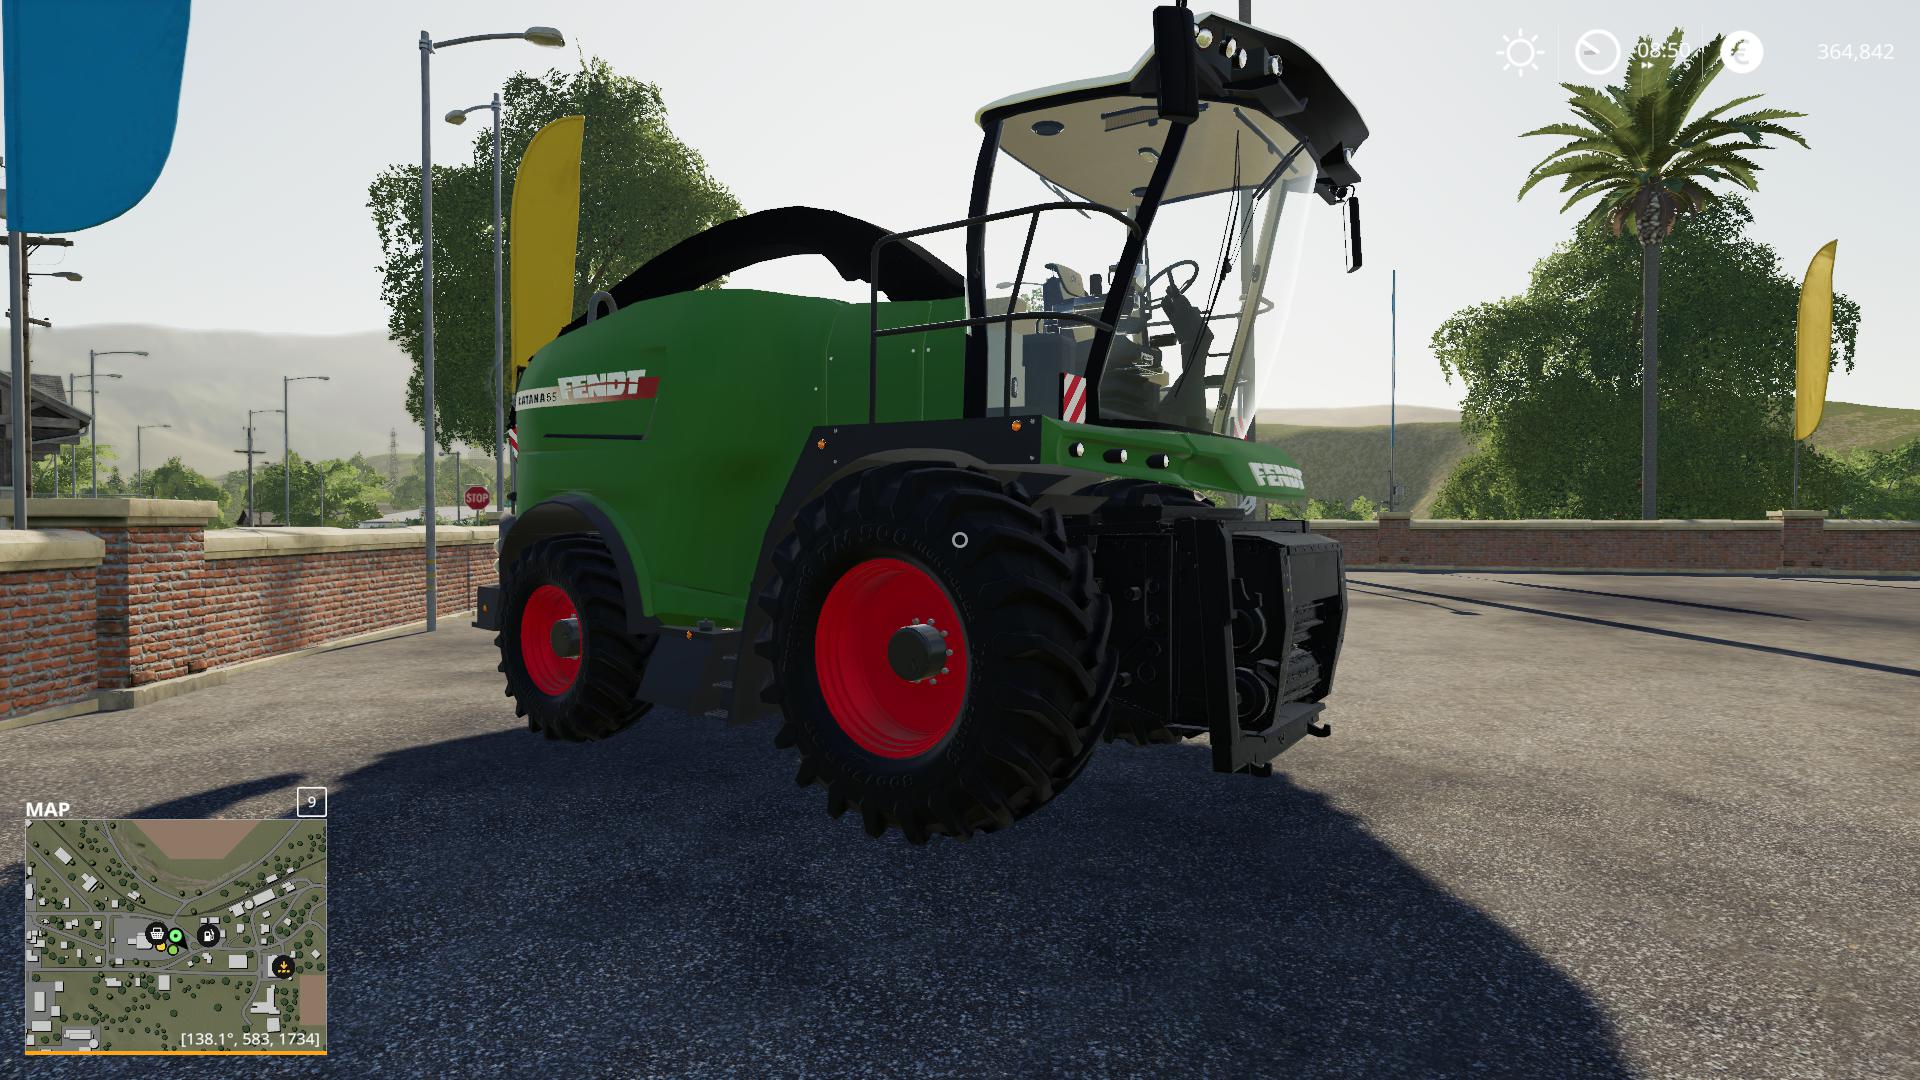 Ls19 Fendt Katana V10 Farming Simulator 19 Mod Ls19 Mod Download Images And Photos Finder 7513